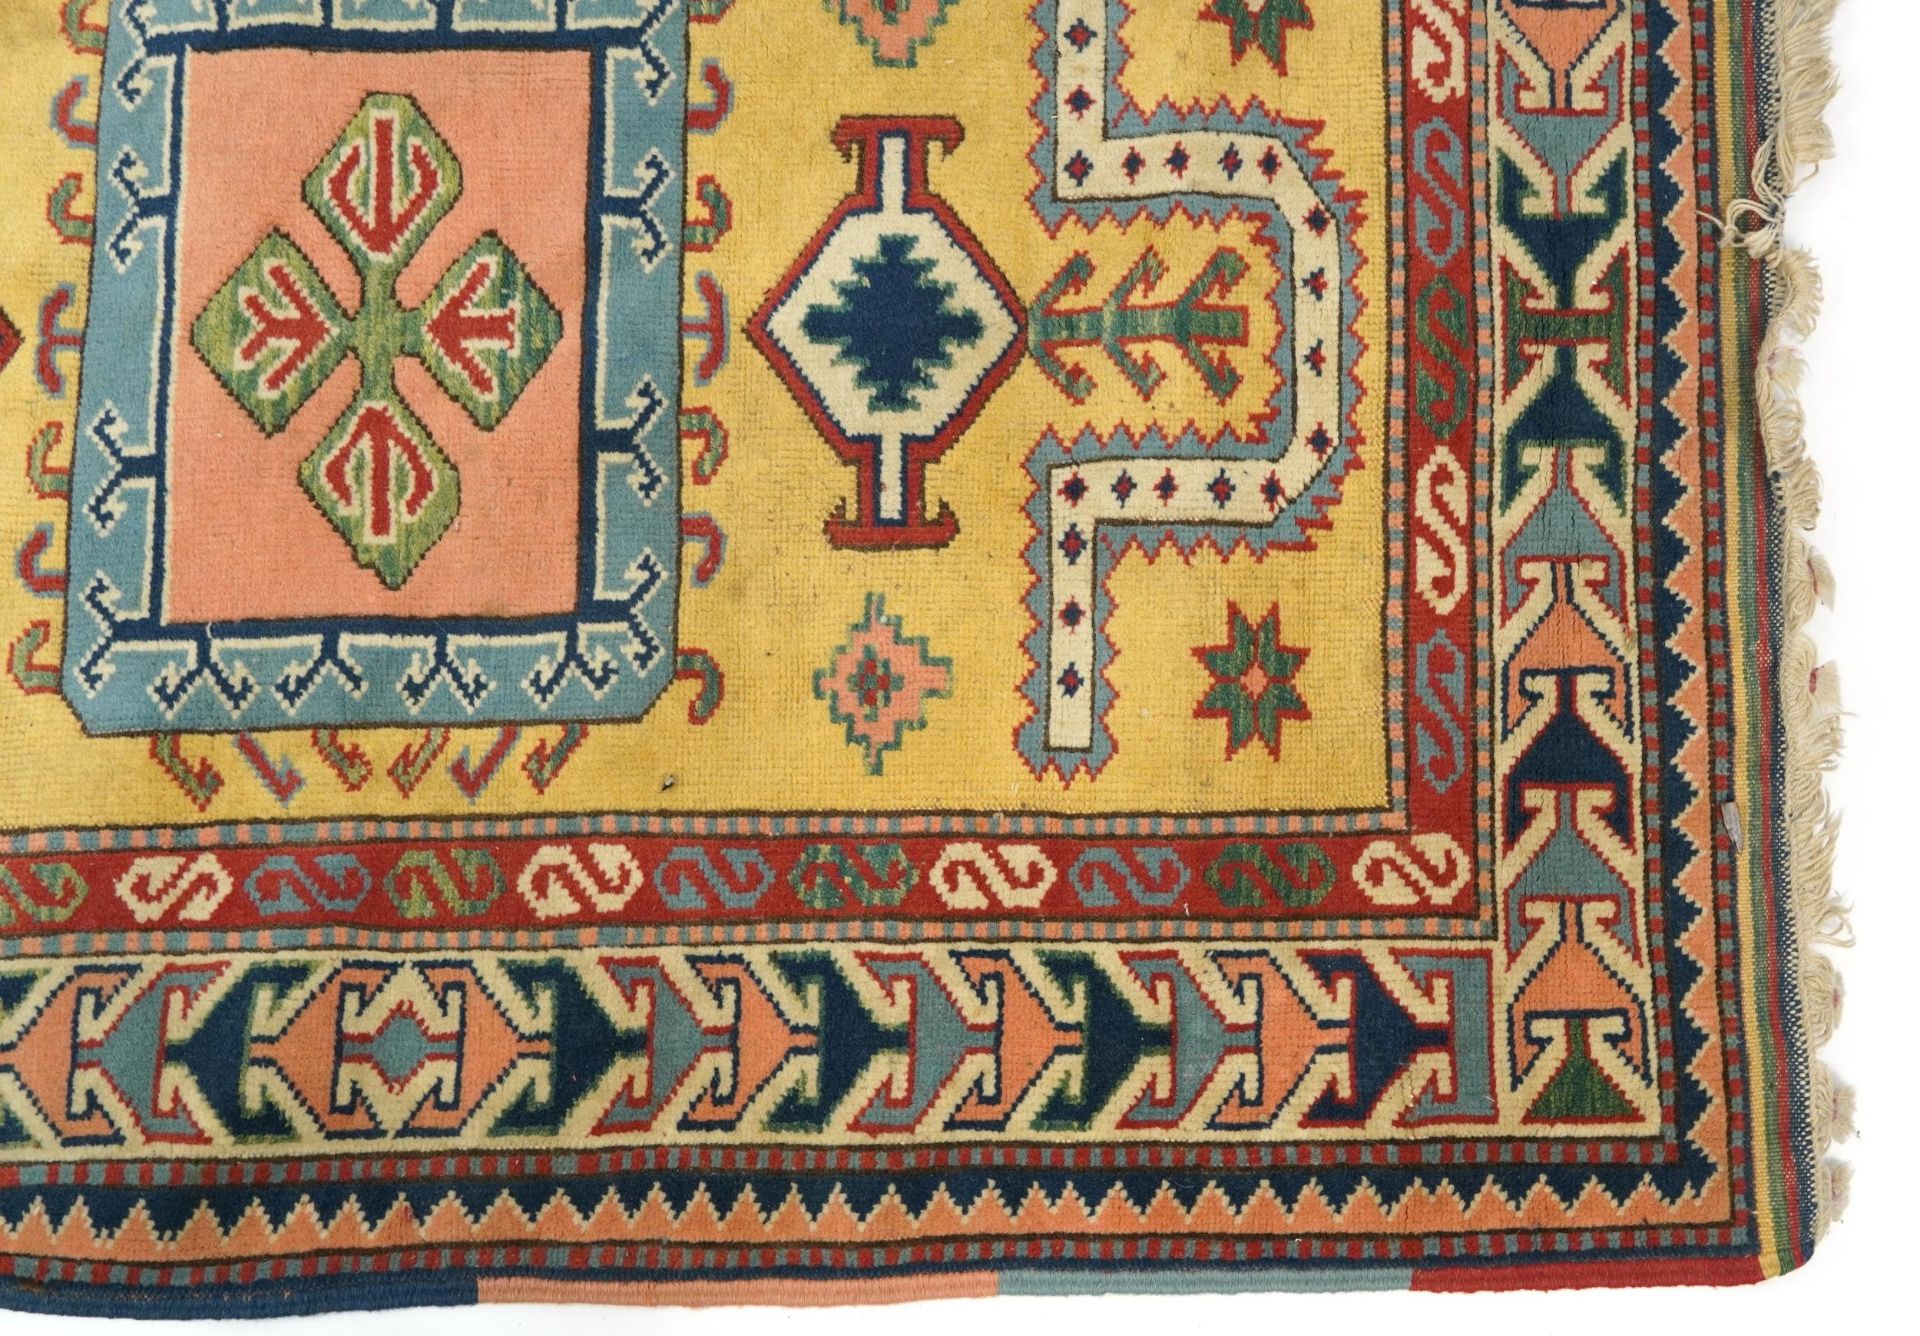 Rectangular Turkish kilim rug having and allover traditional design, 185cm x 125cm - Image 5 of 7